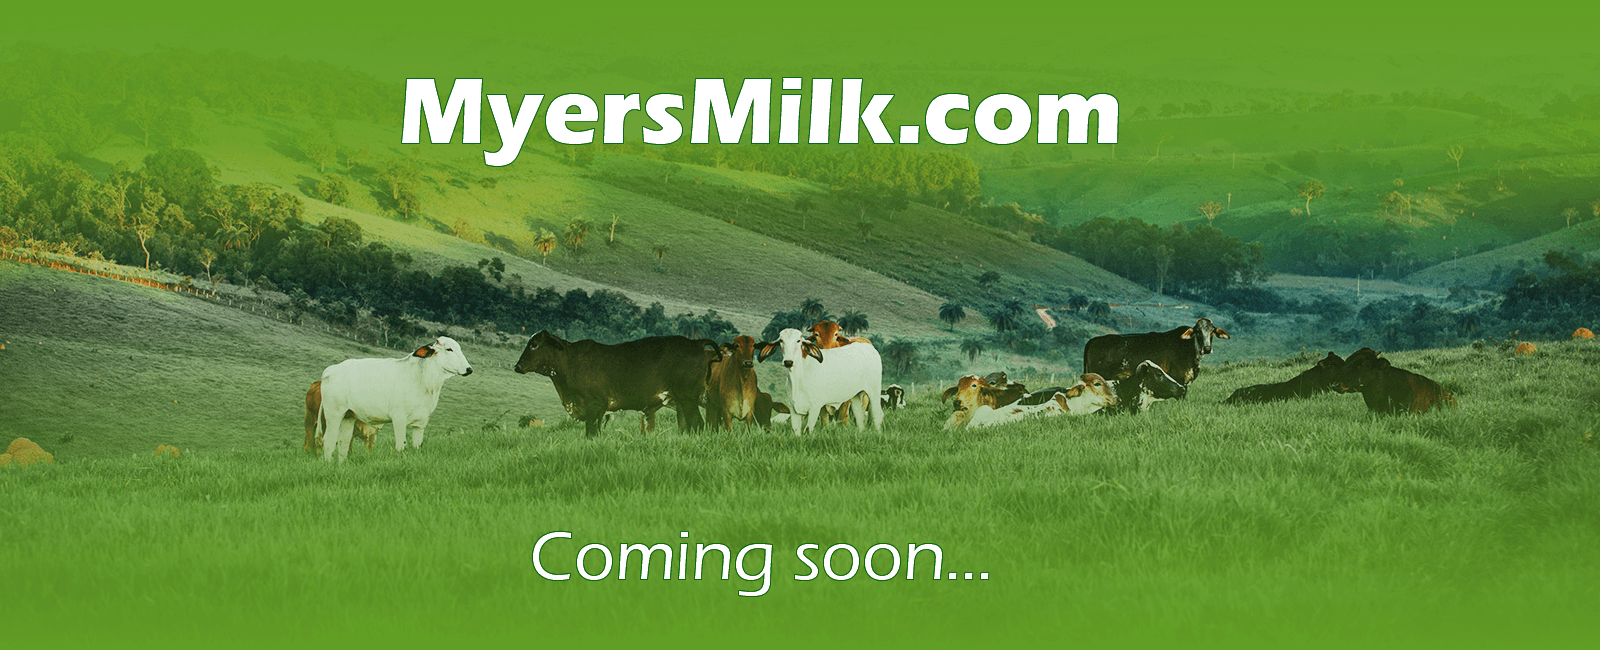 MyersMilk.com is coming soon!